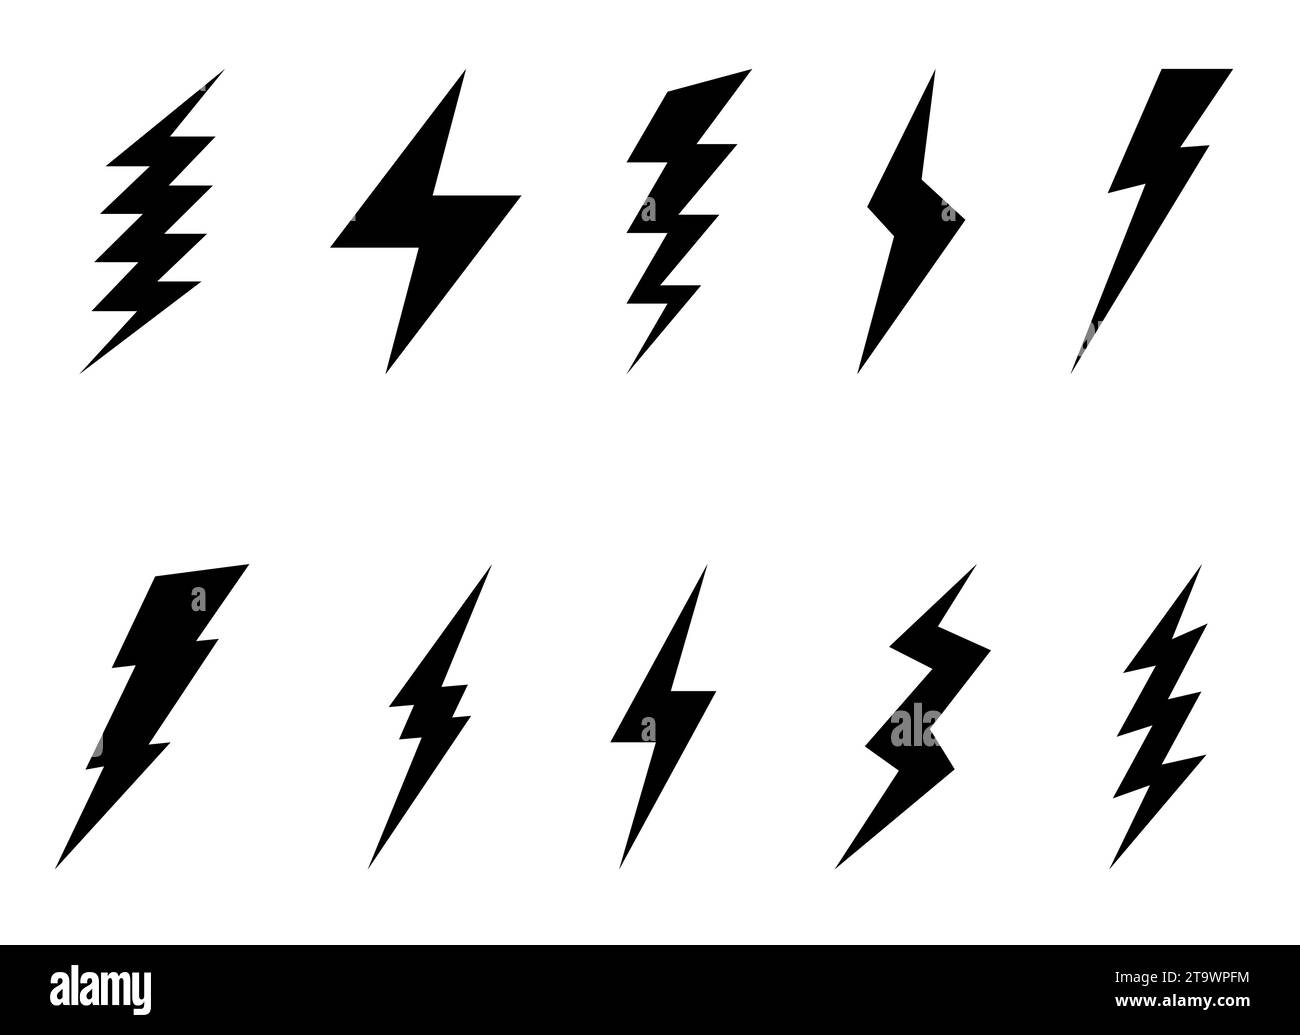 Lightning bolt icons collection set isolated on white background. Flash symbol, thunderbolt. Simple lightning strike sign. Vector illustration. Stock Vector